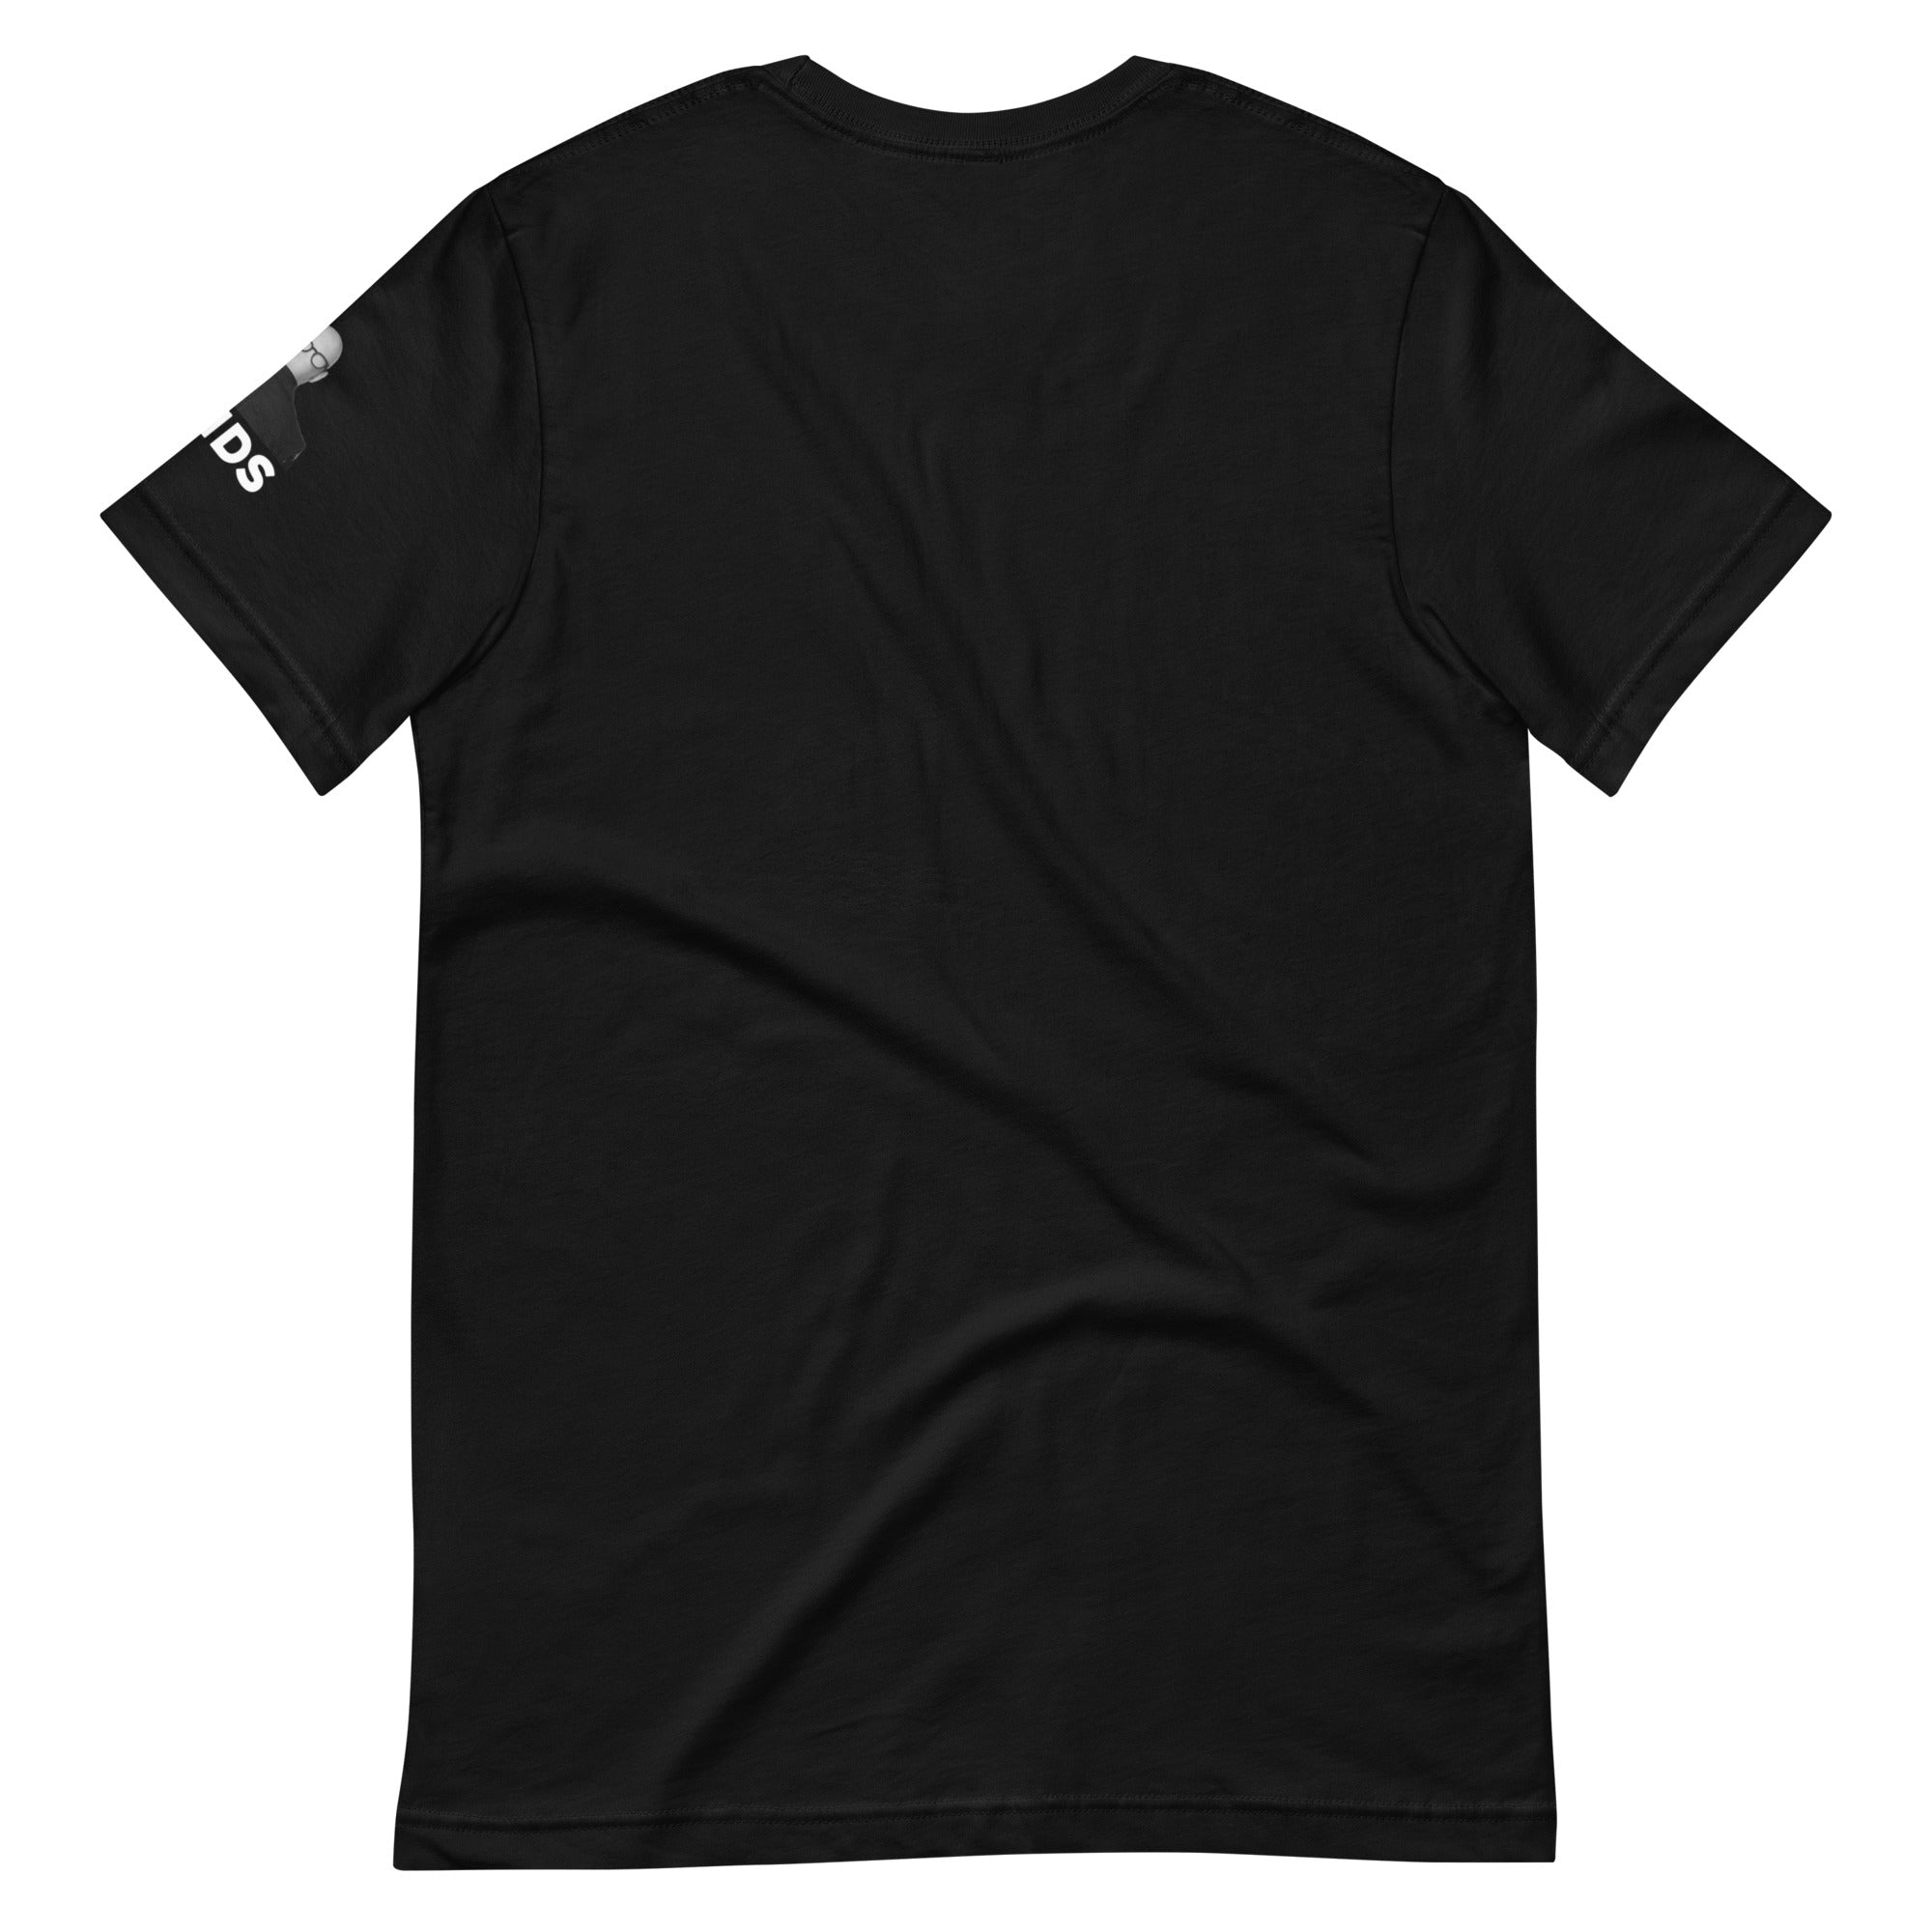 Howie Mandel Ejucation T-Shirt